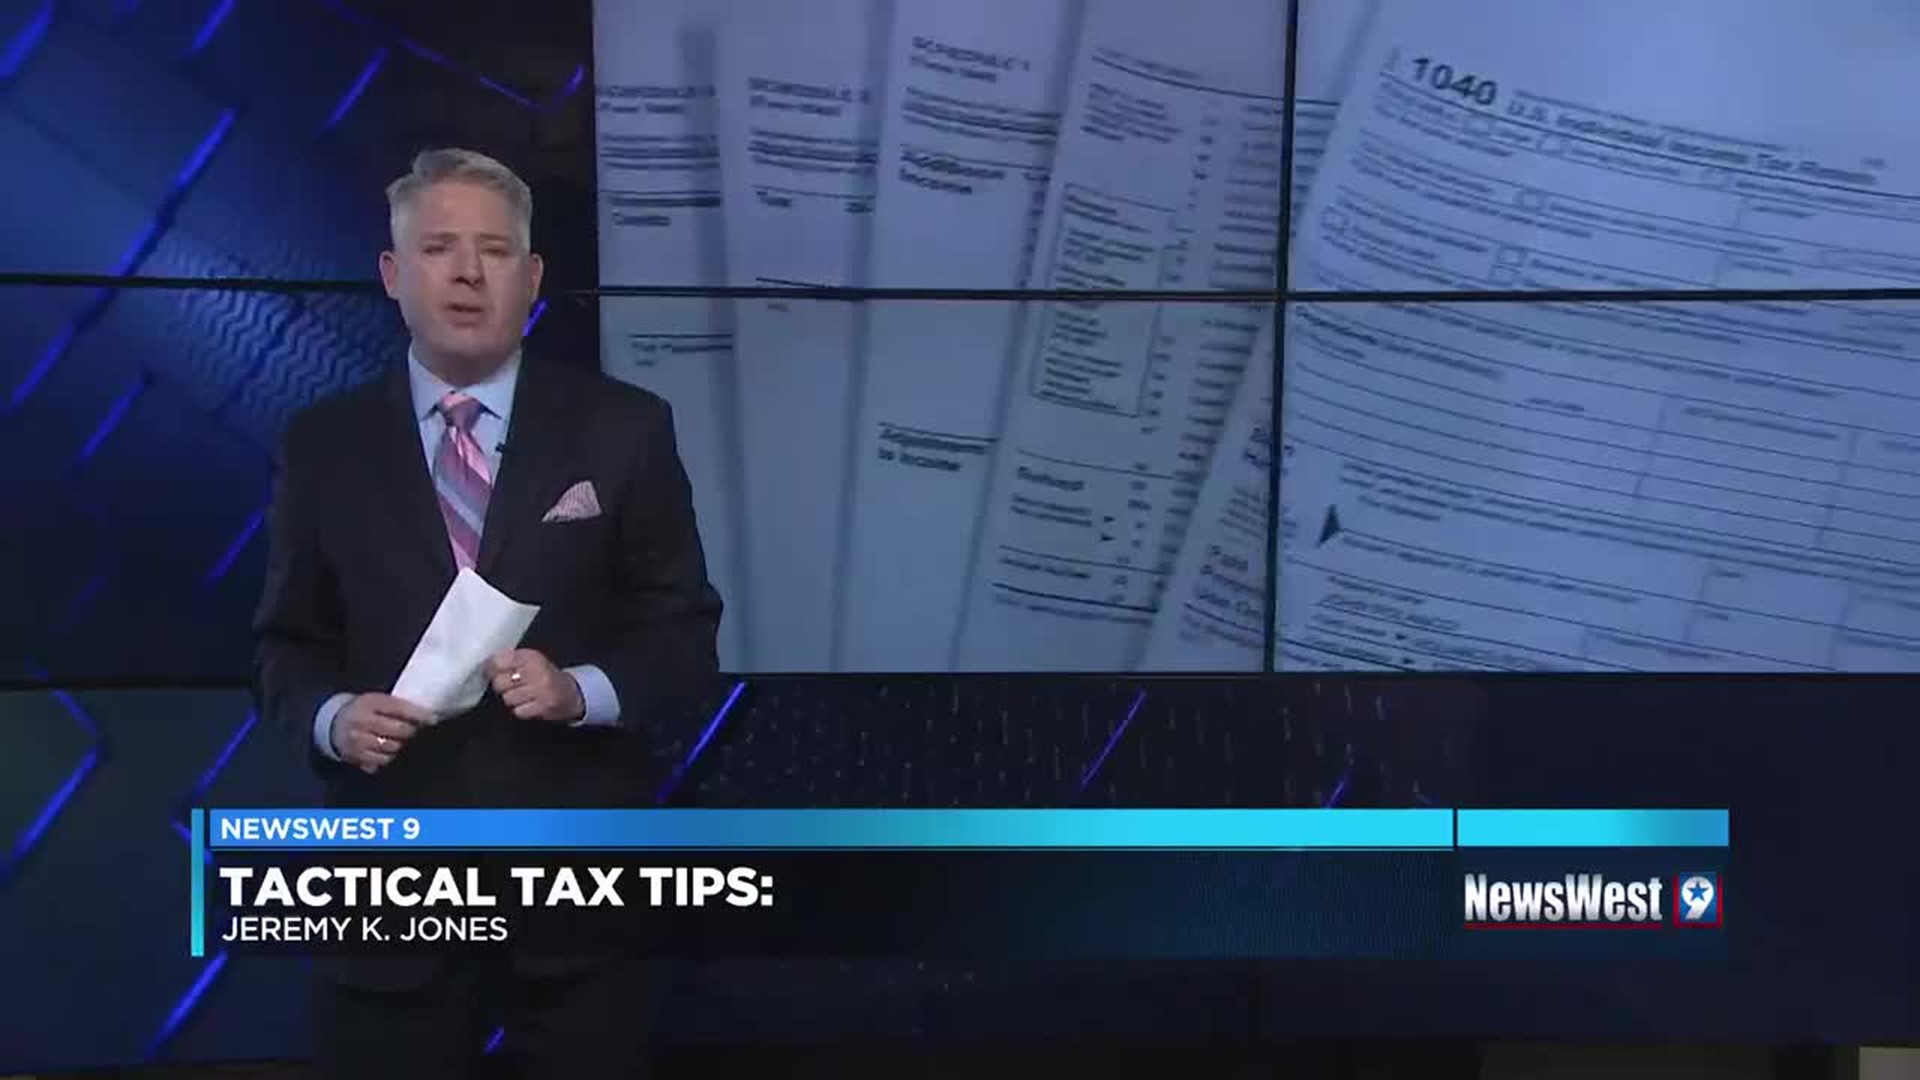 Tactical Tax Tips